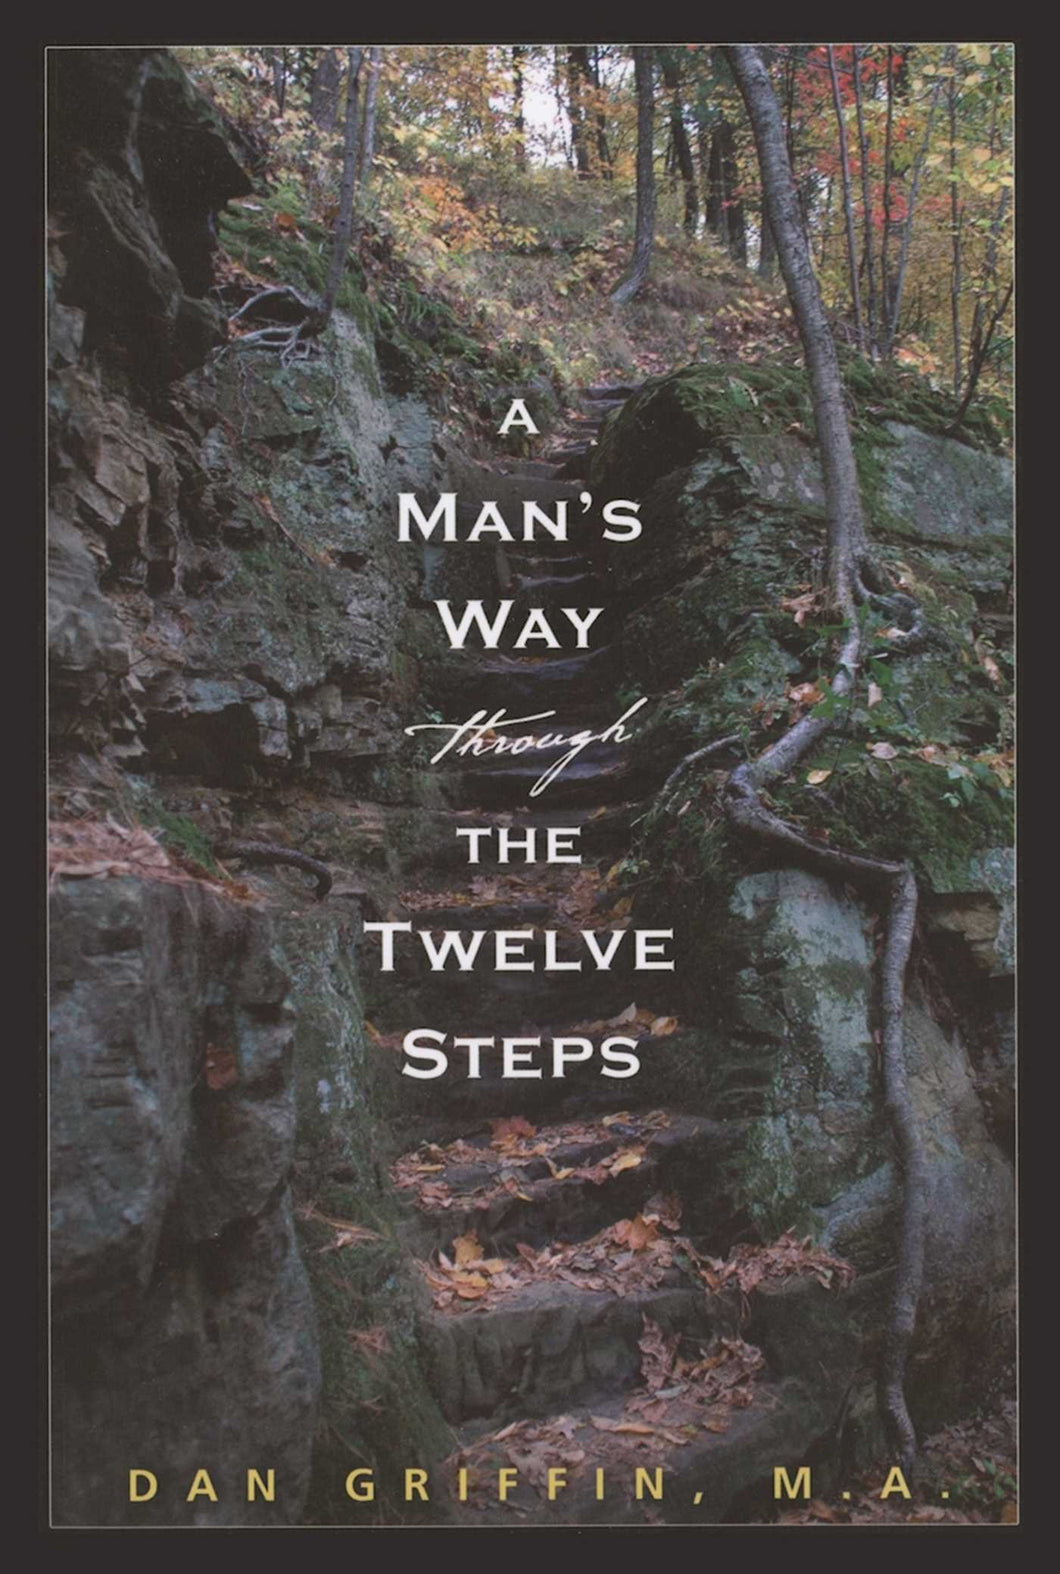 A Man's Way Through the 12 Steps